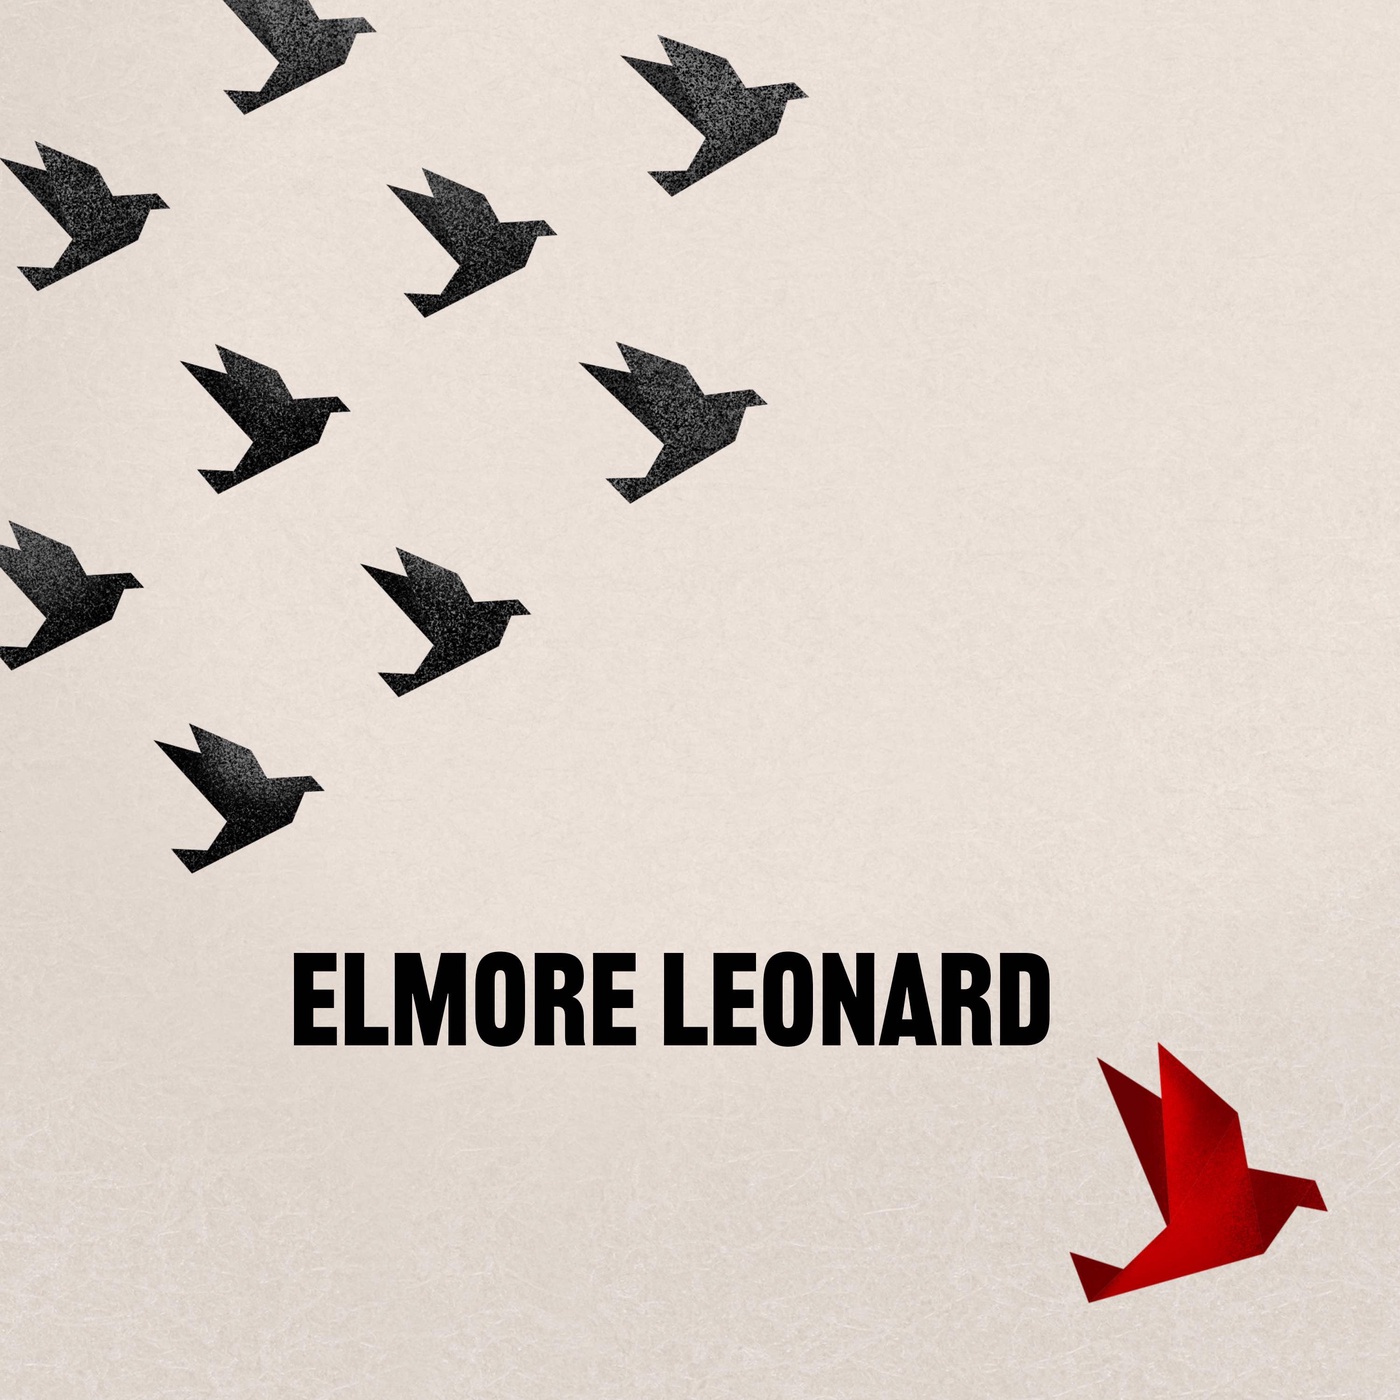 Elmore Leonard